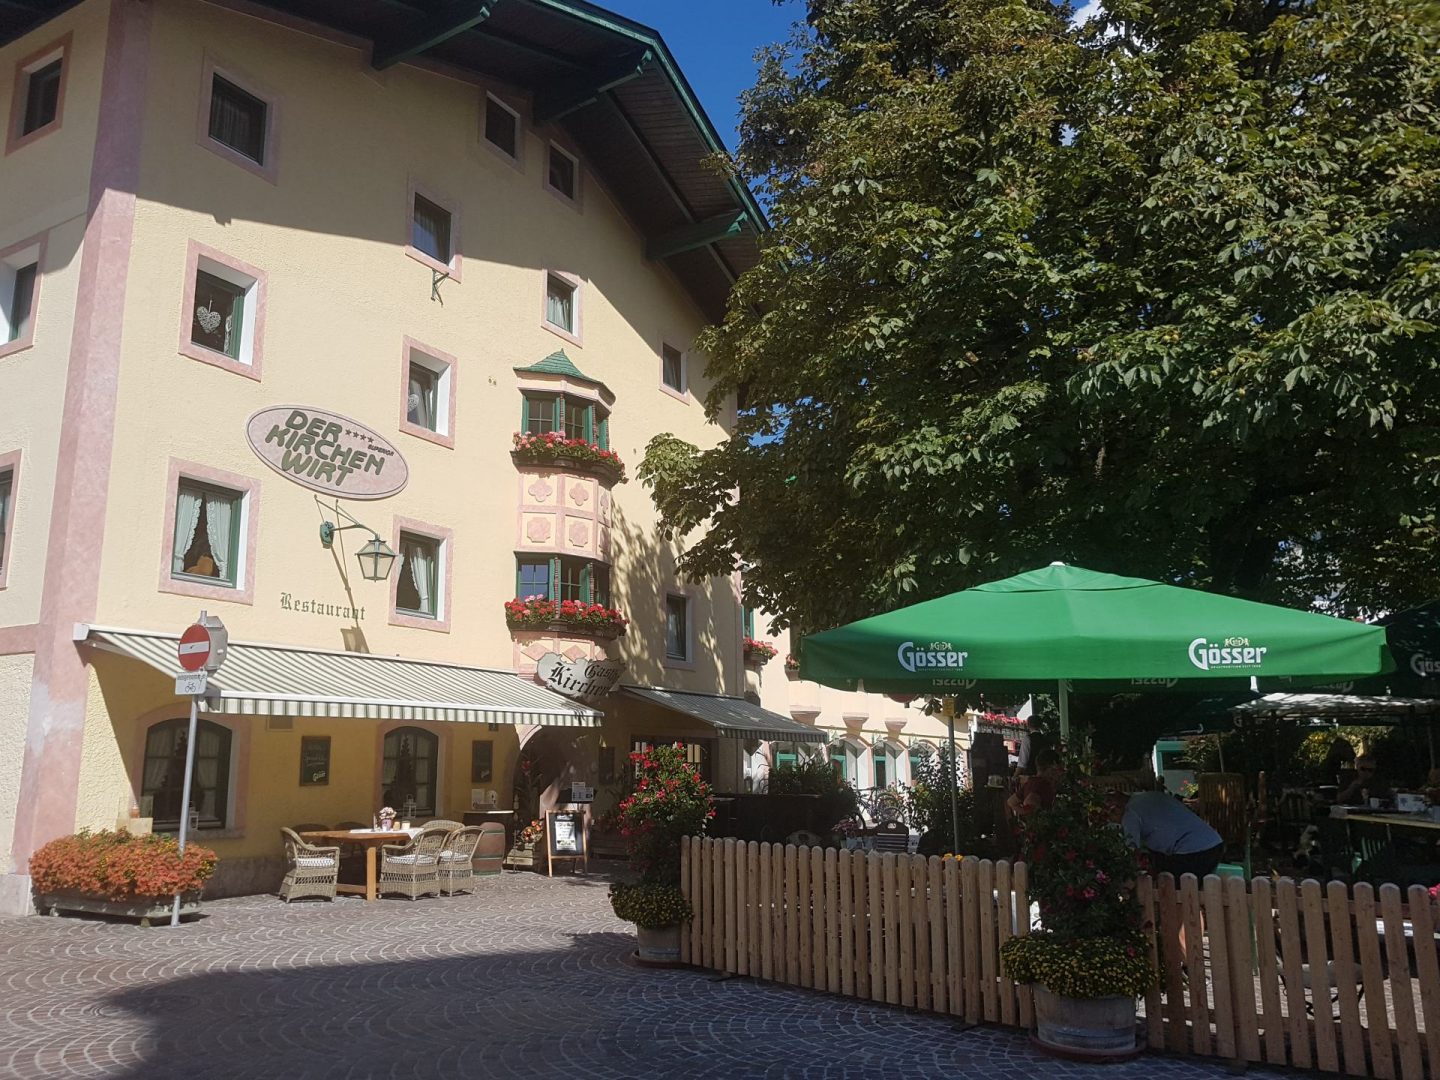 Erfahrung Bewertung Kritik Kirchenwirt Reith im Alpbachtal Foodblog Sternestulle